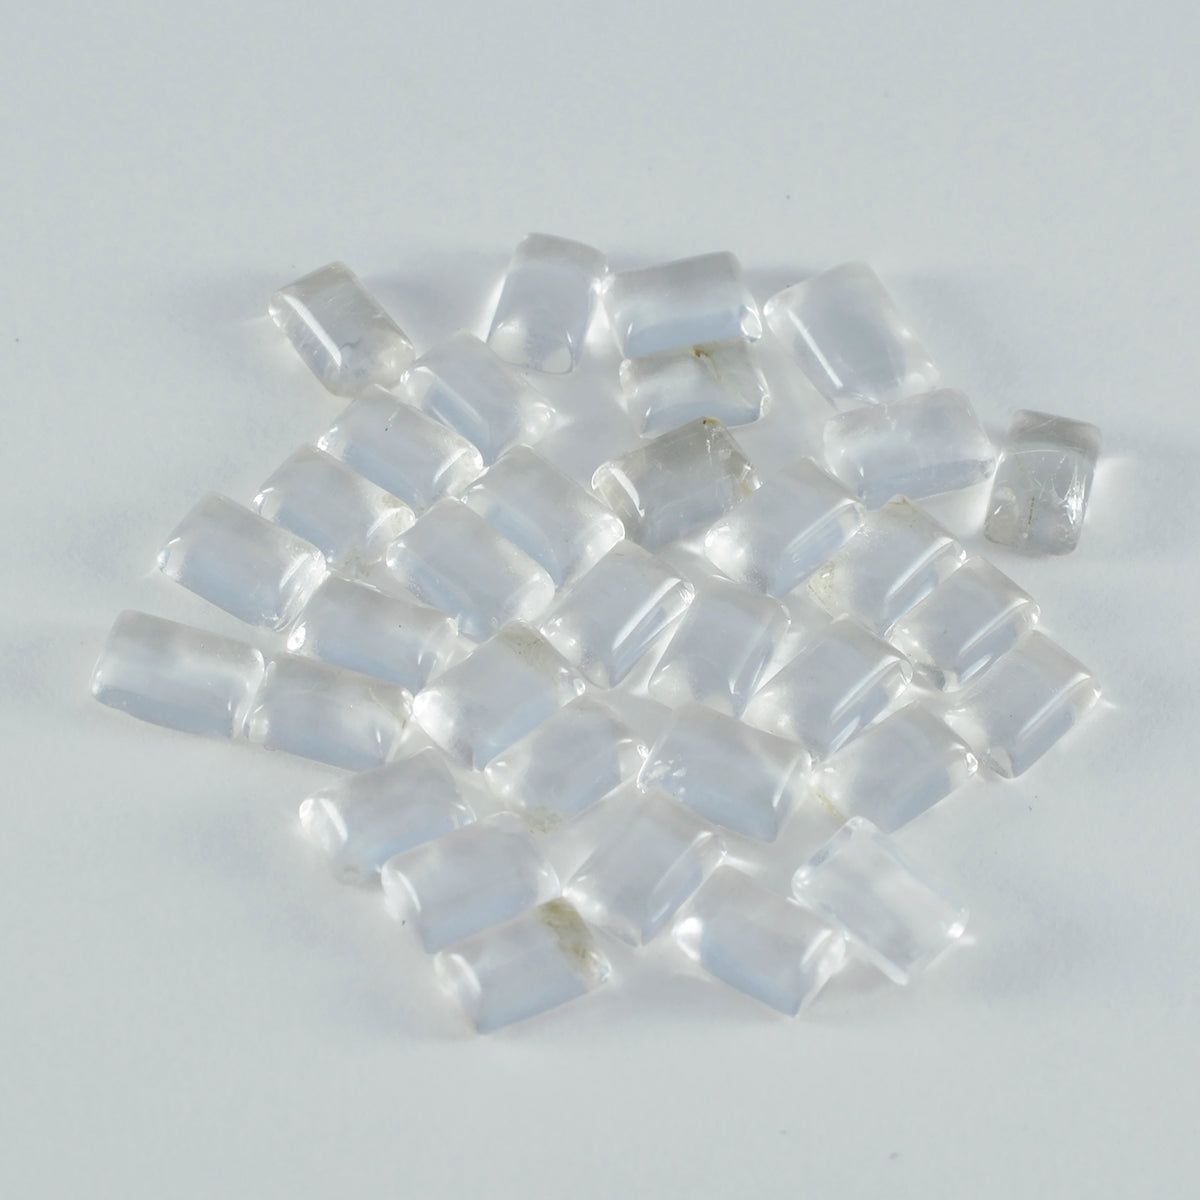 Riyogems 1PC White Crystal Quartz Cabochon 4x6 mm Octagon Shape excellent Quality Gem